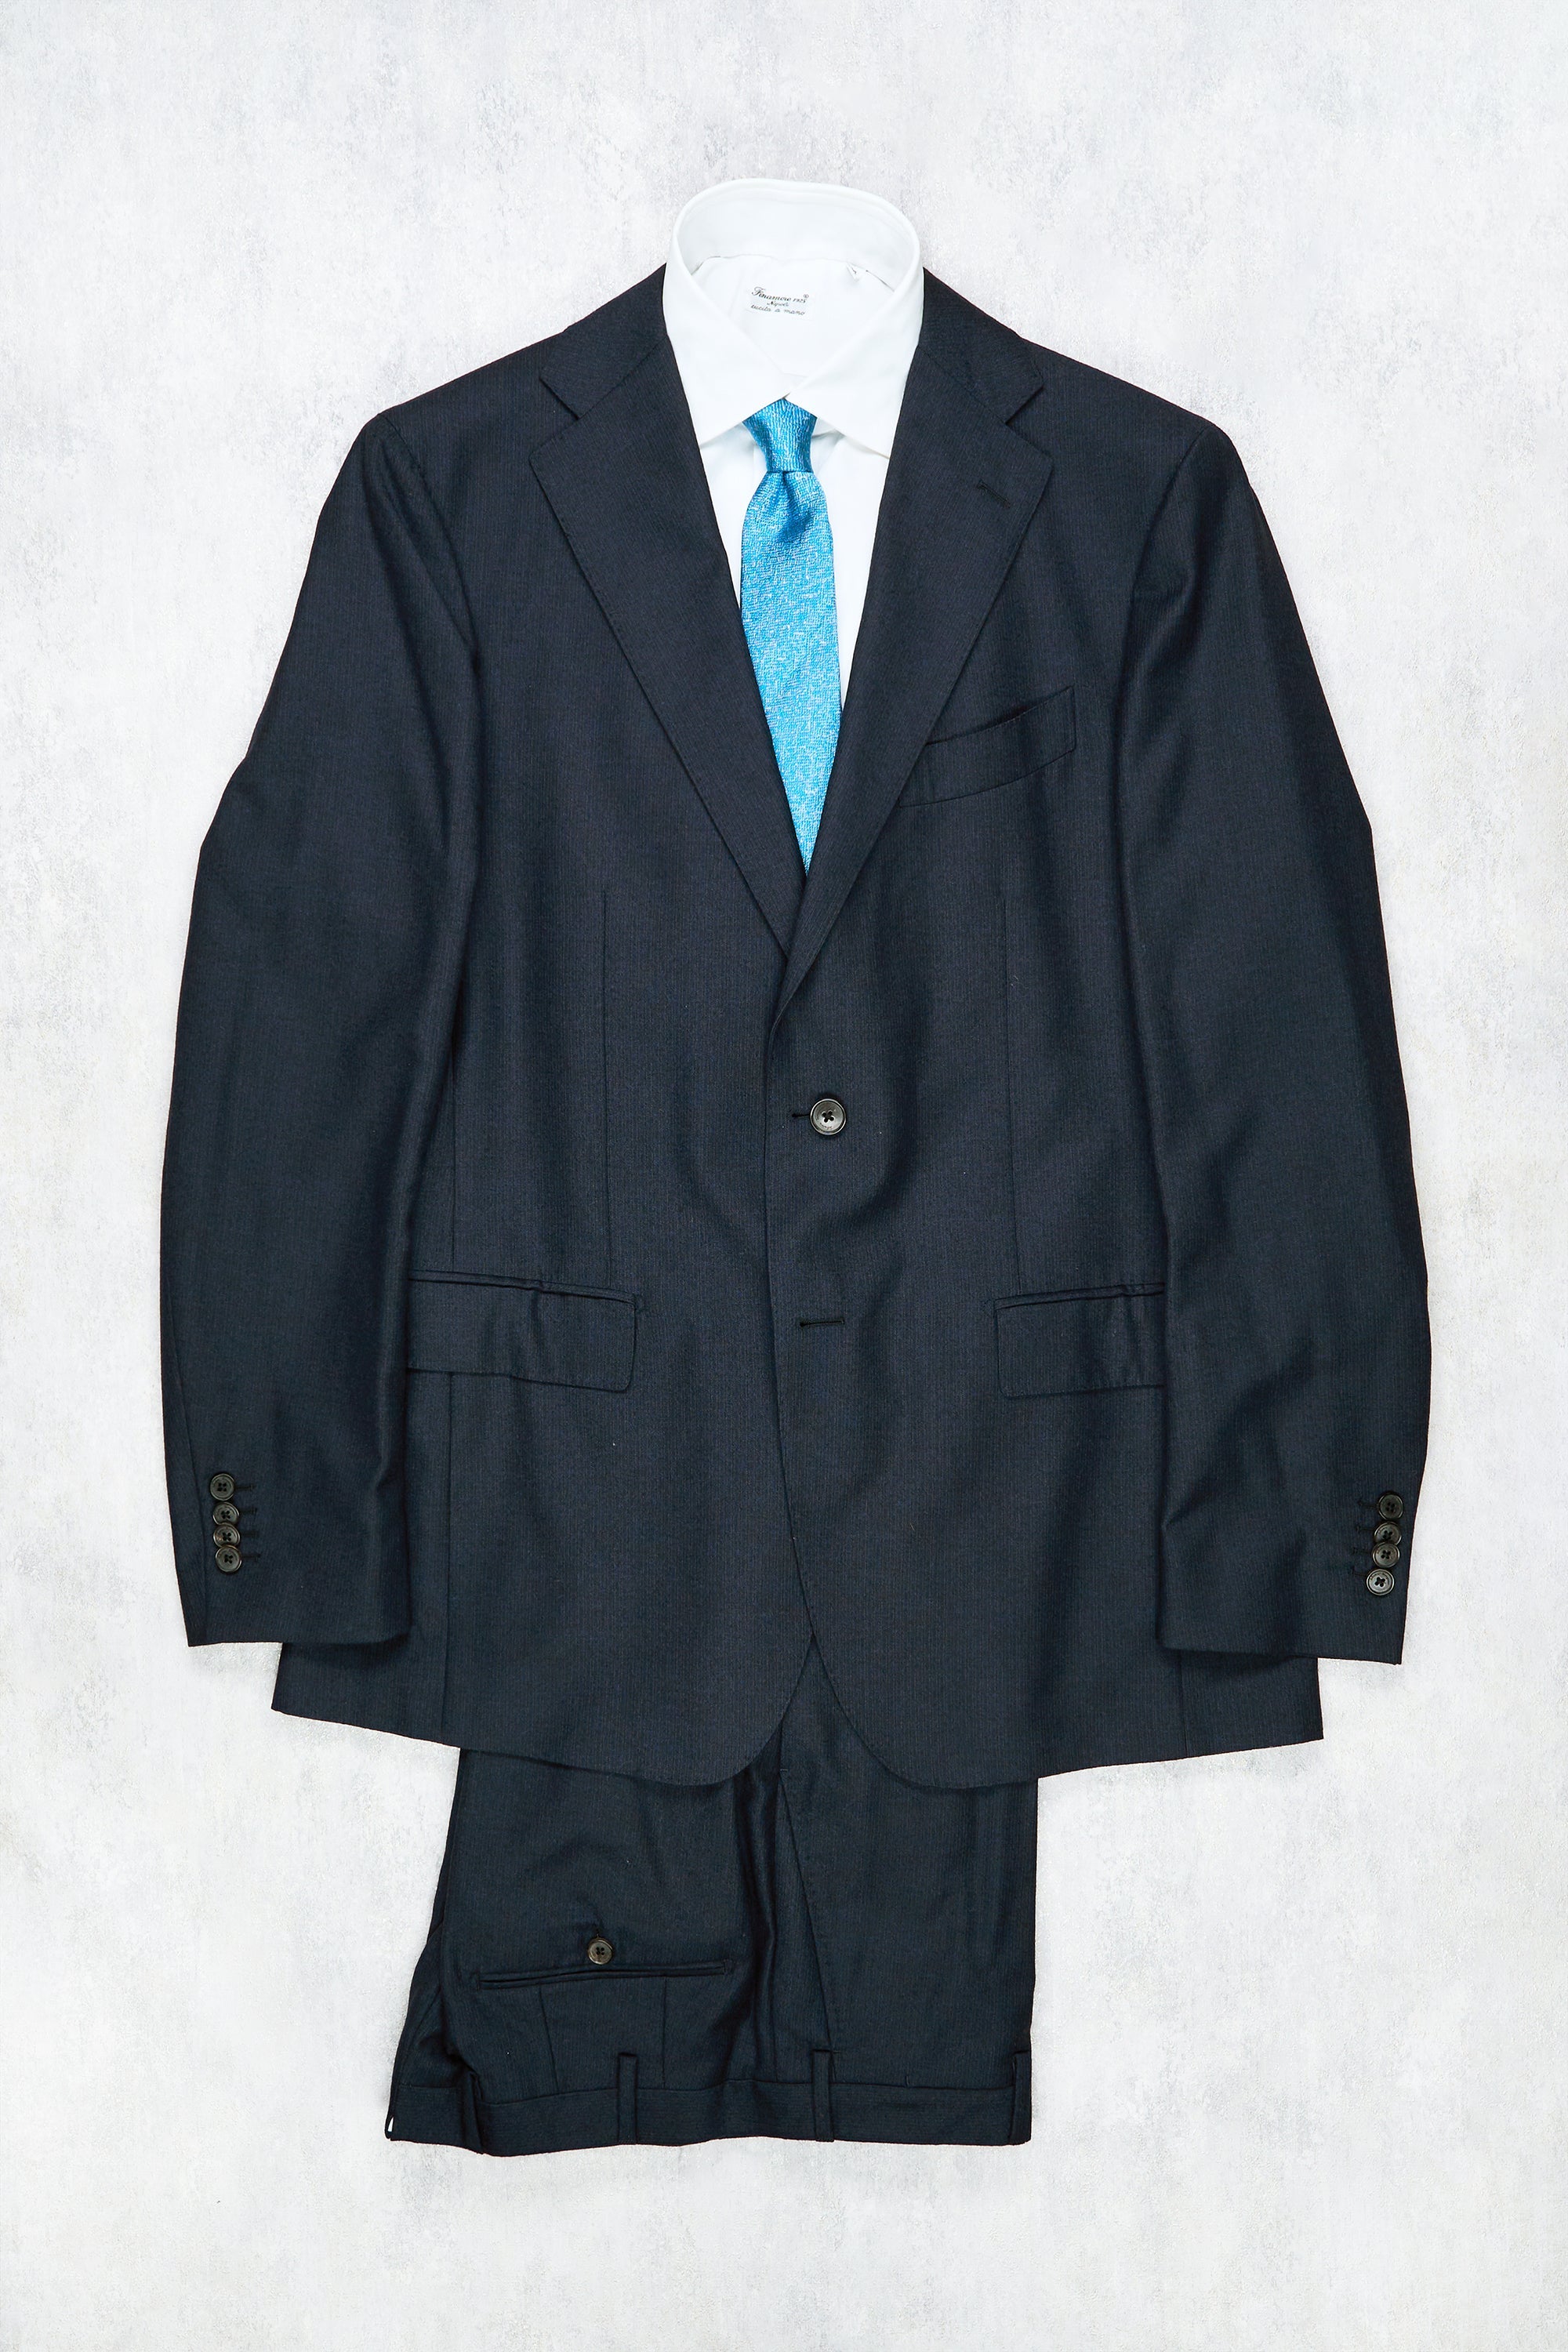 Salvatore Ferragamo Navy Stripe Wool/Cashmere Suit